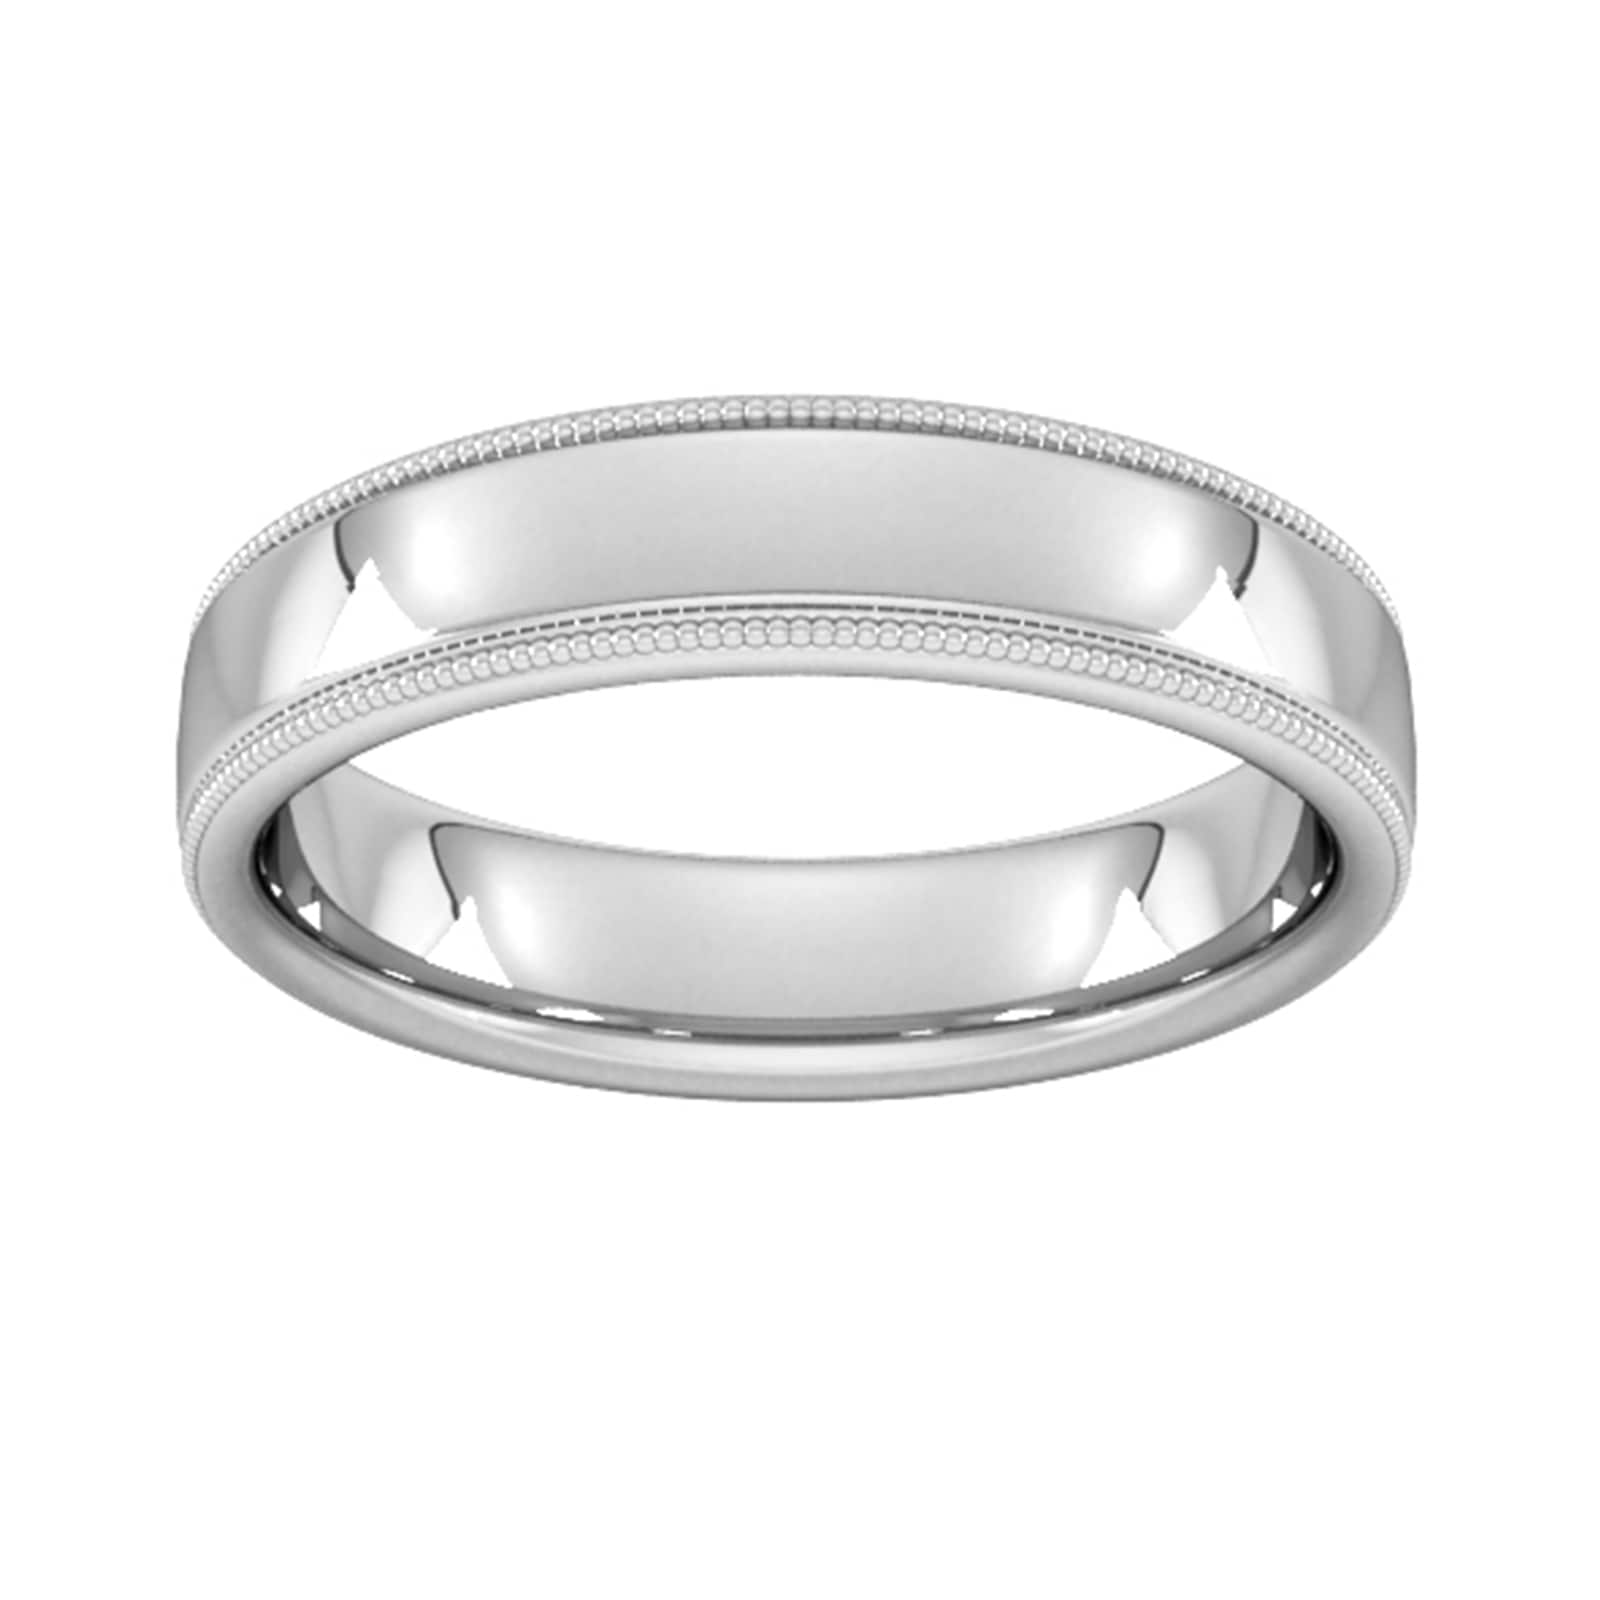 5mm Flat Court Heavy Milgrain Edge Wedding Ring In 18 Carat White Gold - Ring Size Q